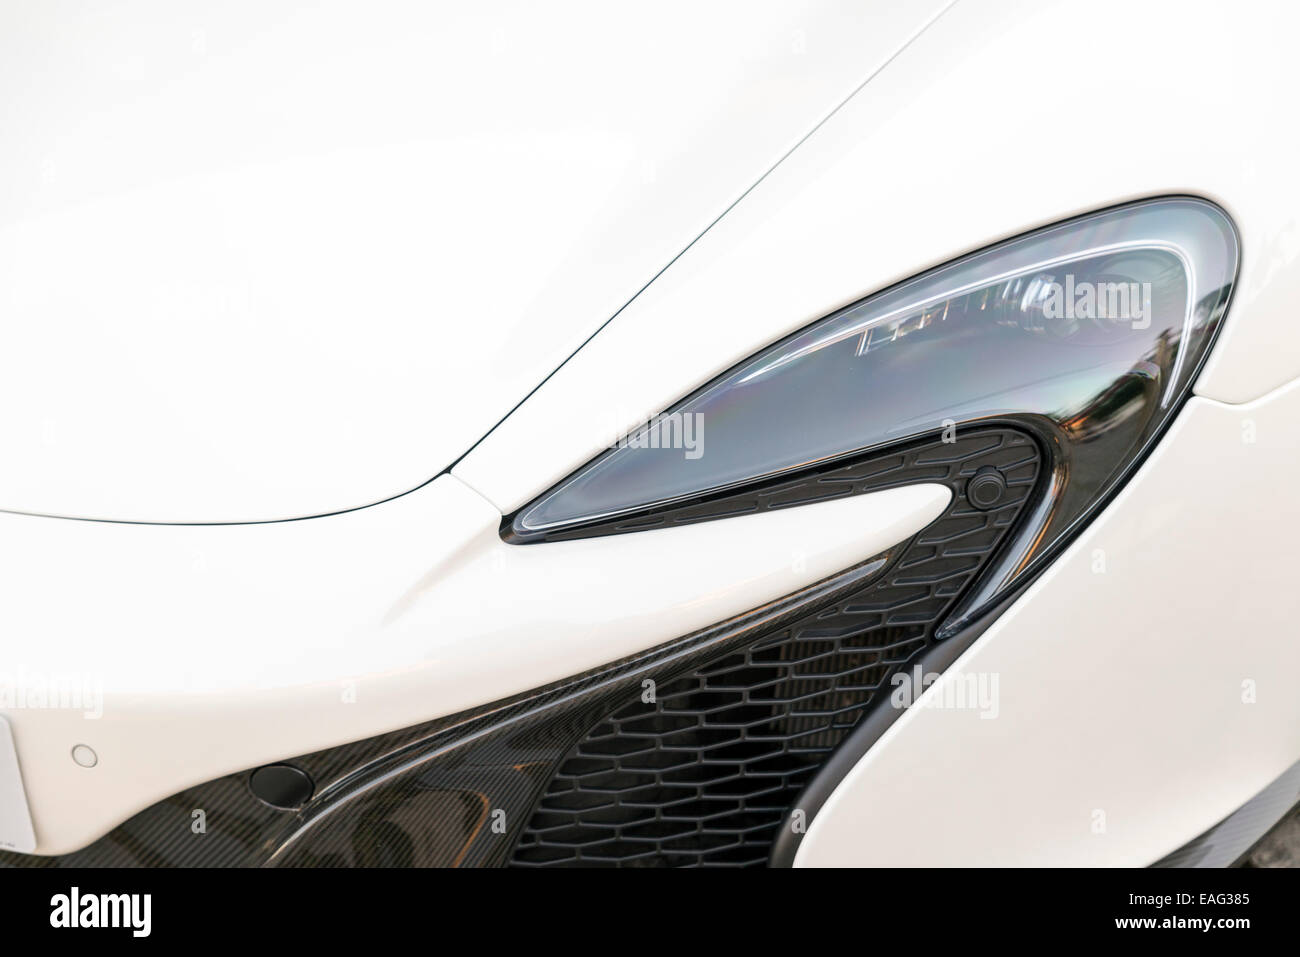 LIVERPOOL, UK - JUNE 8, 2014: Detail of Headlamp of a sports car McLaren 650S Stock Photo